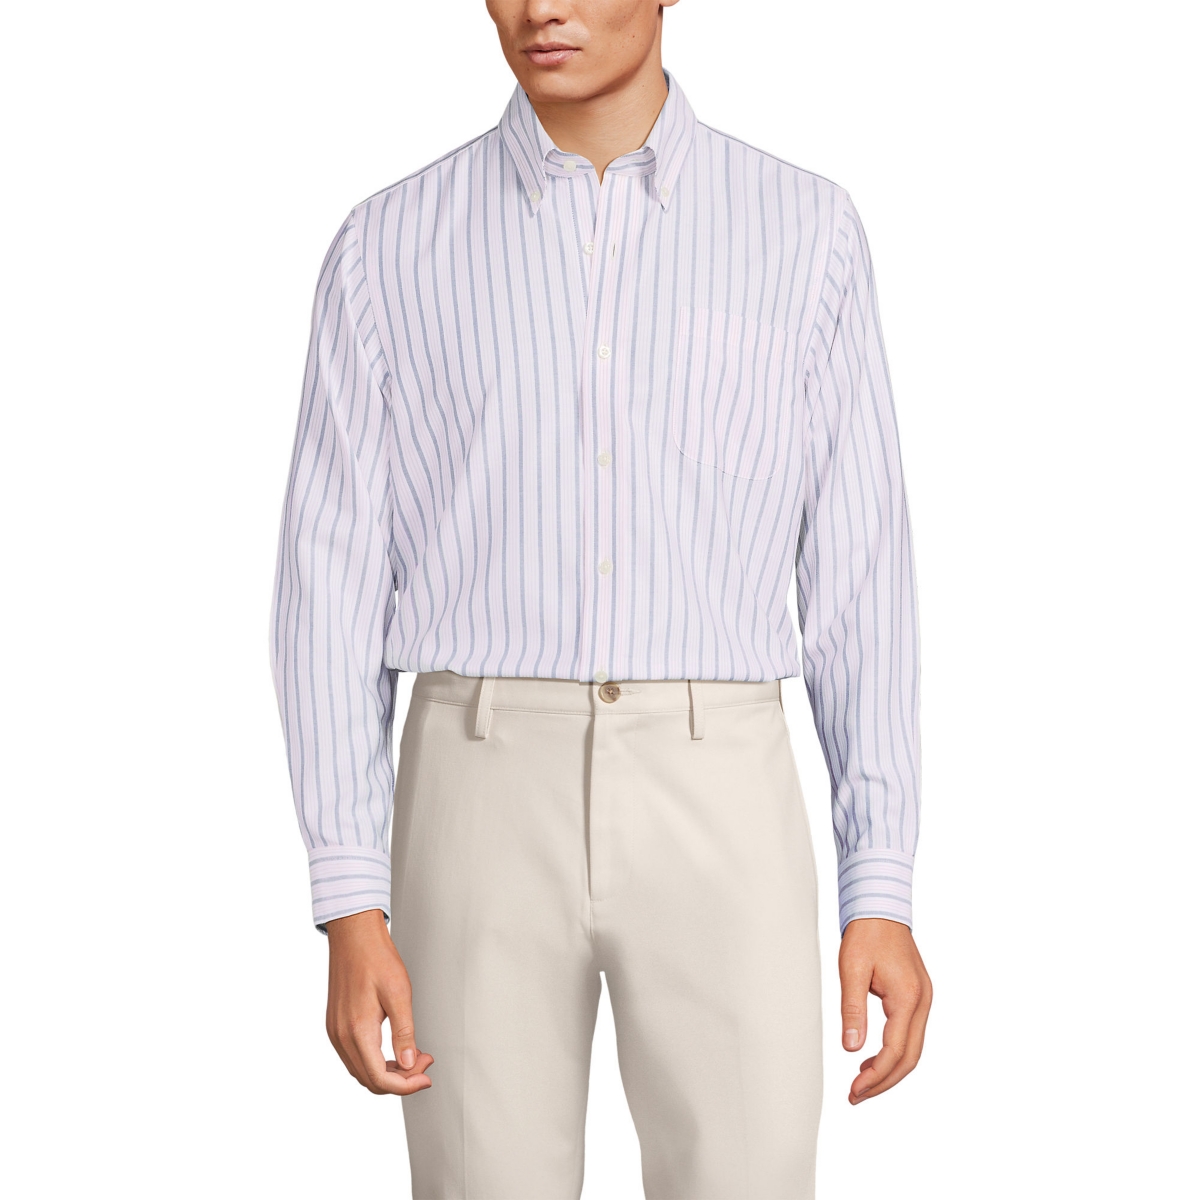 Men's Tailored Fit No Iron Pattern Supima Cotton Oxford Dress Shirt - Evening blue/pink stripe